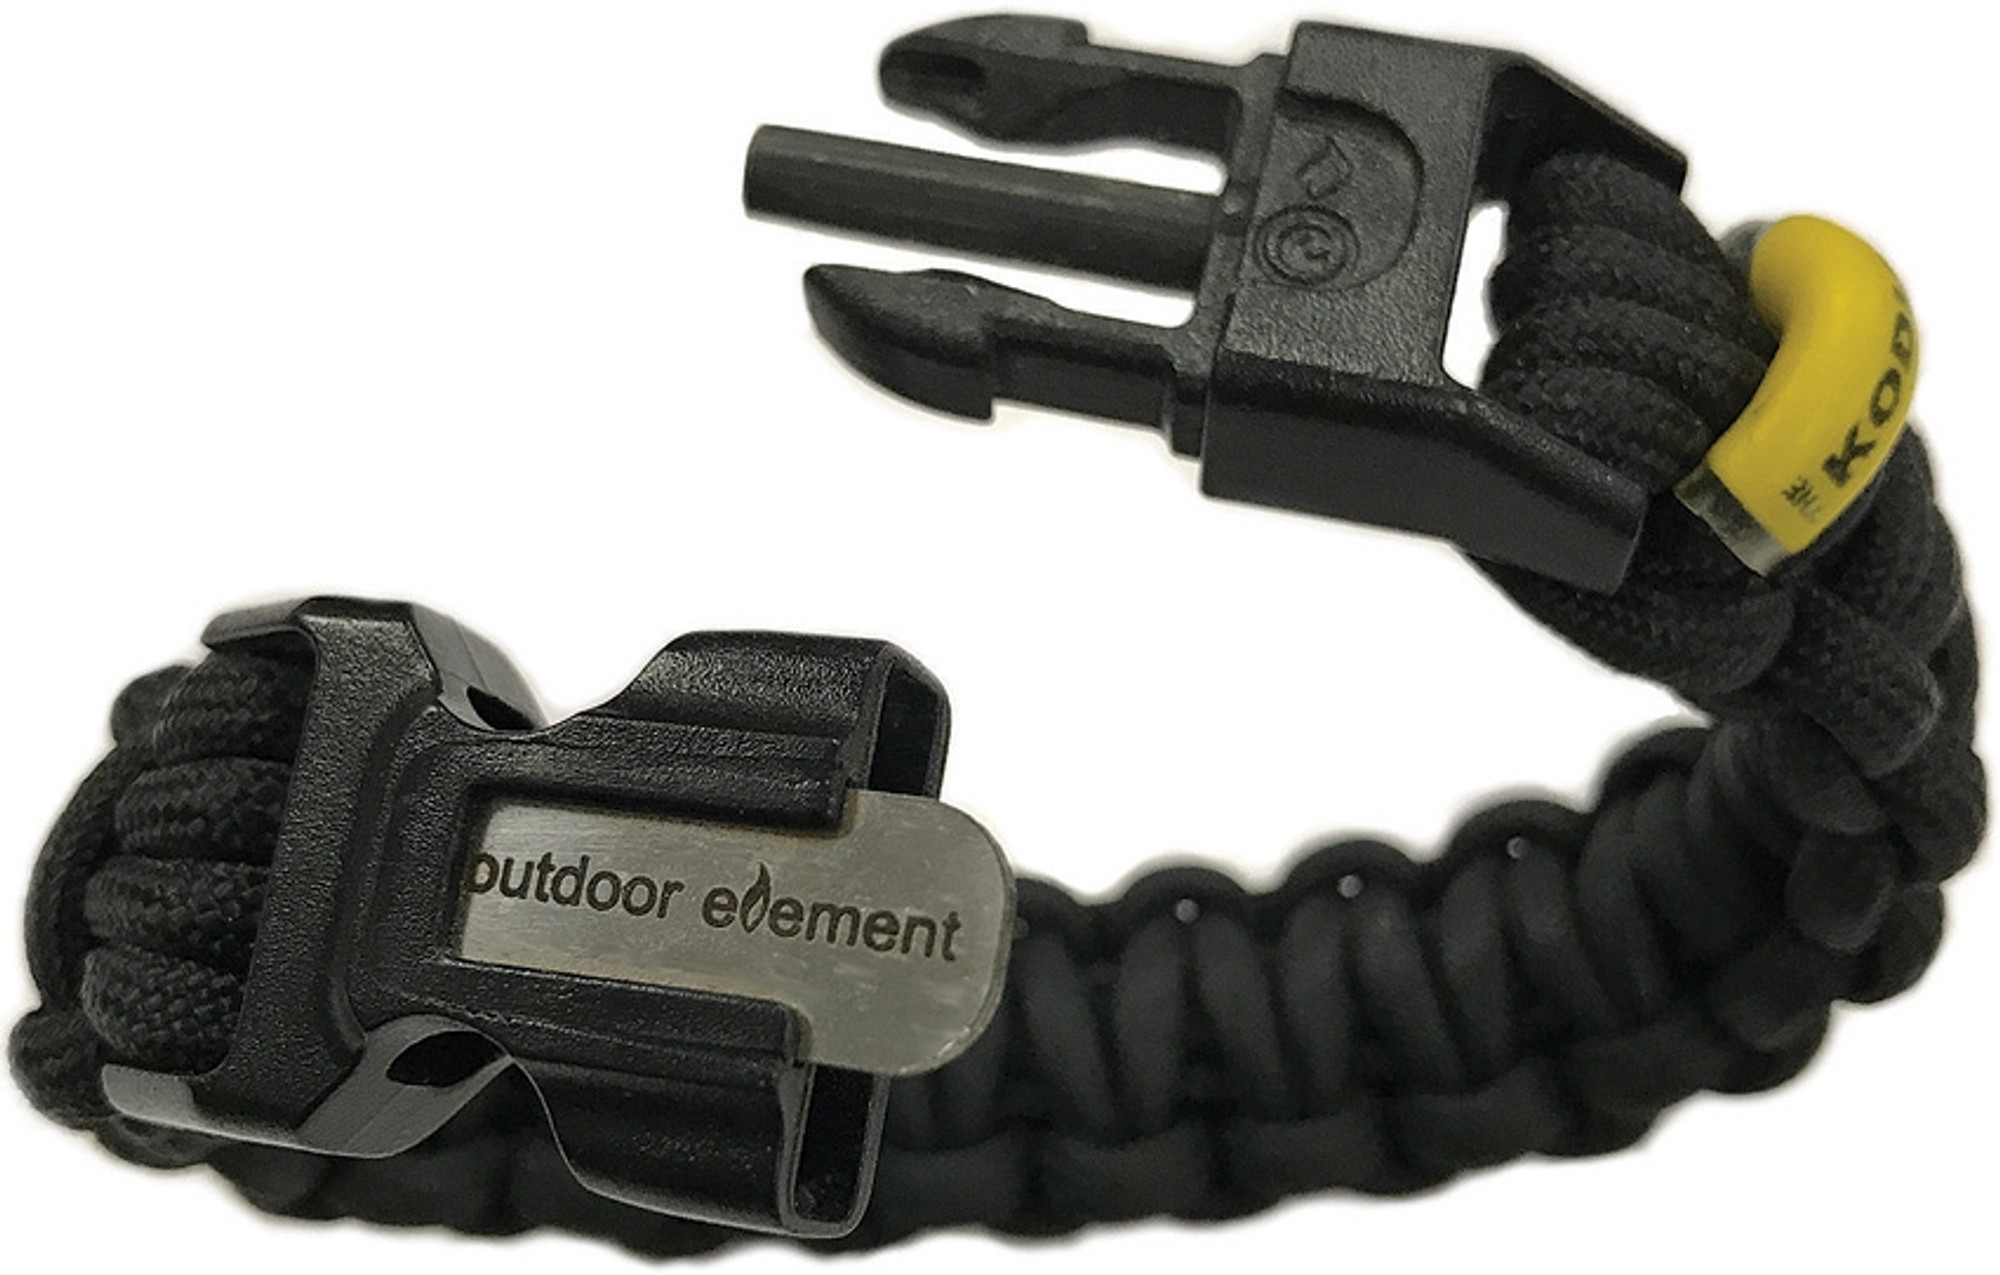 Kodiak Survival Bracelet Black